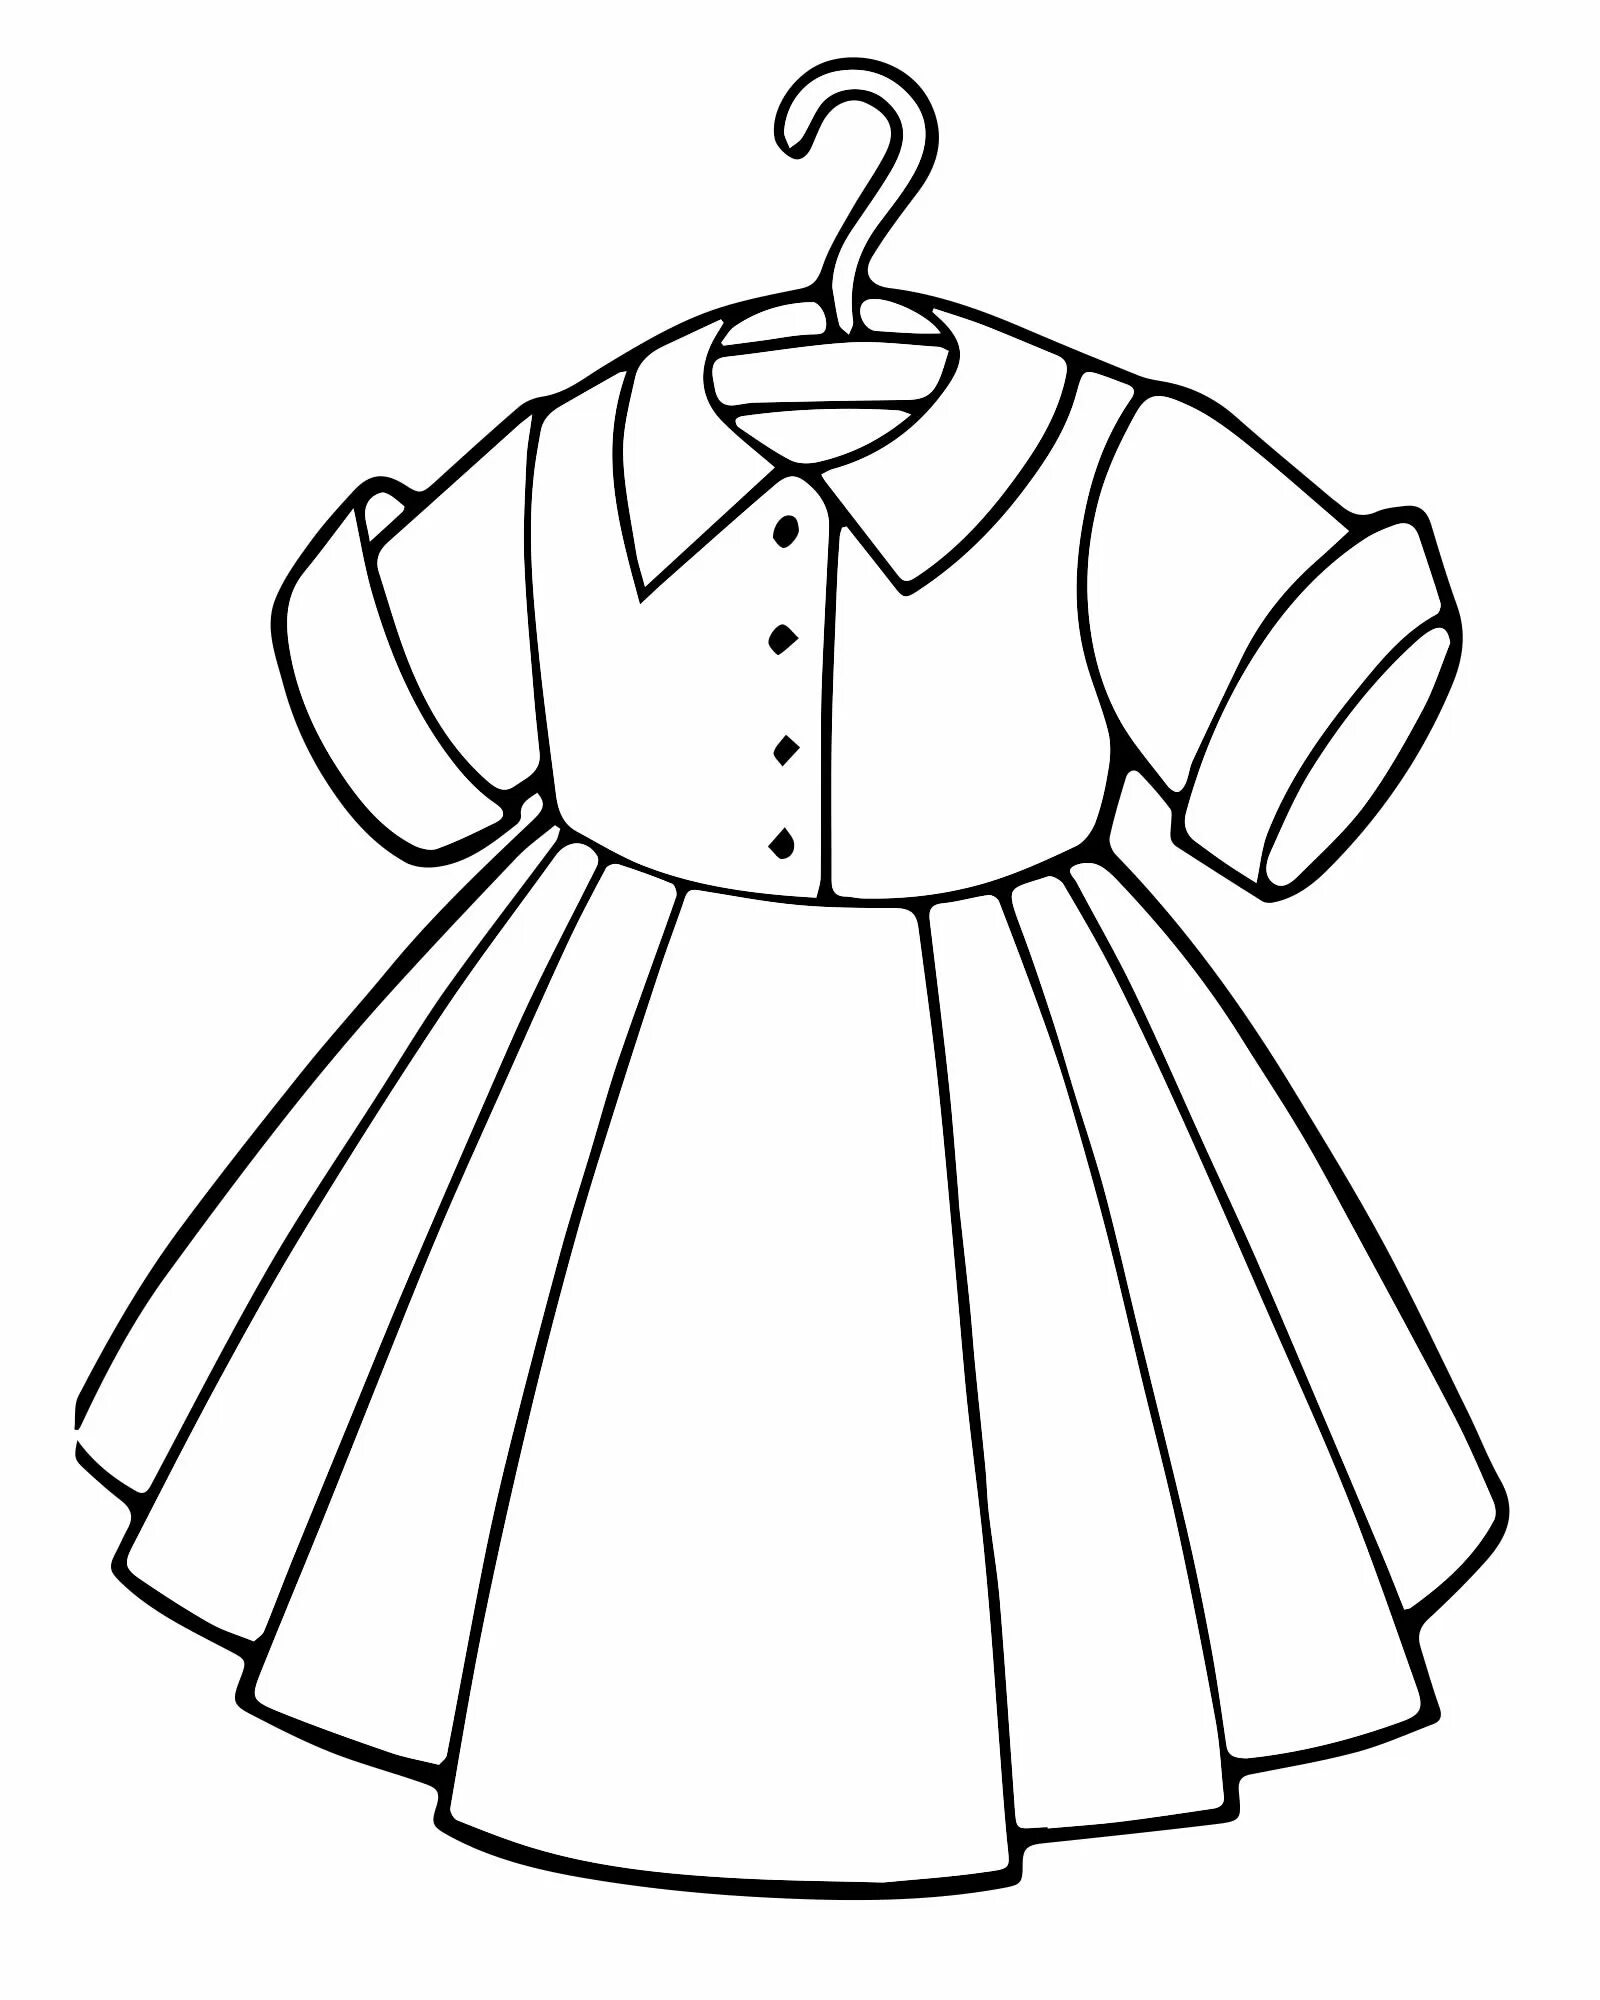 Dress pattern for kids #9